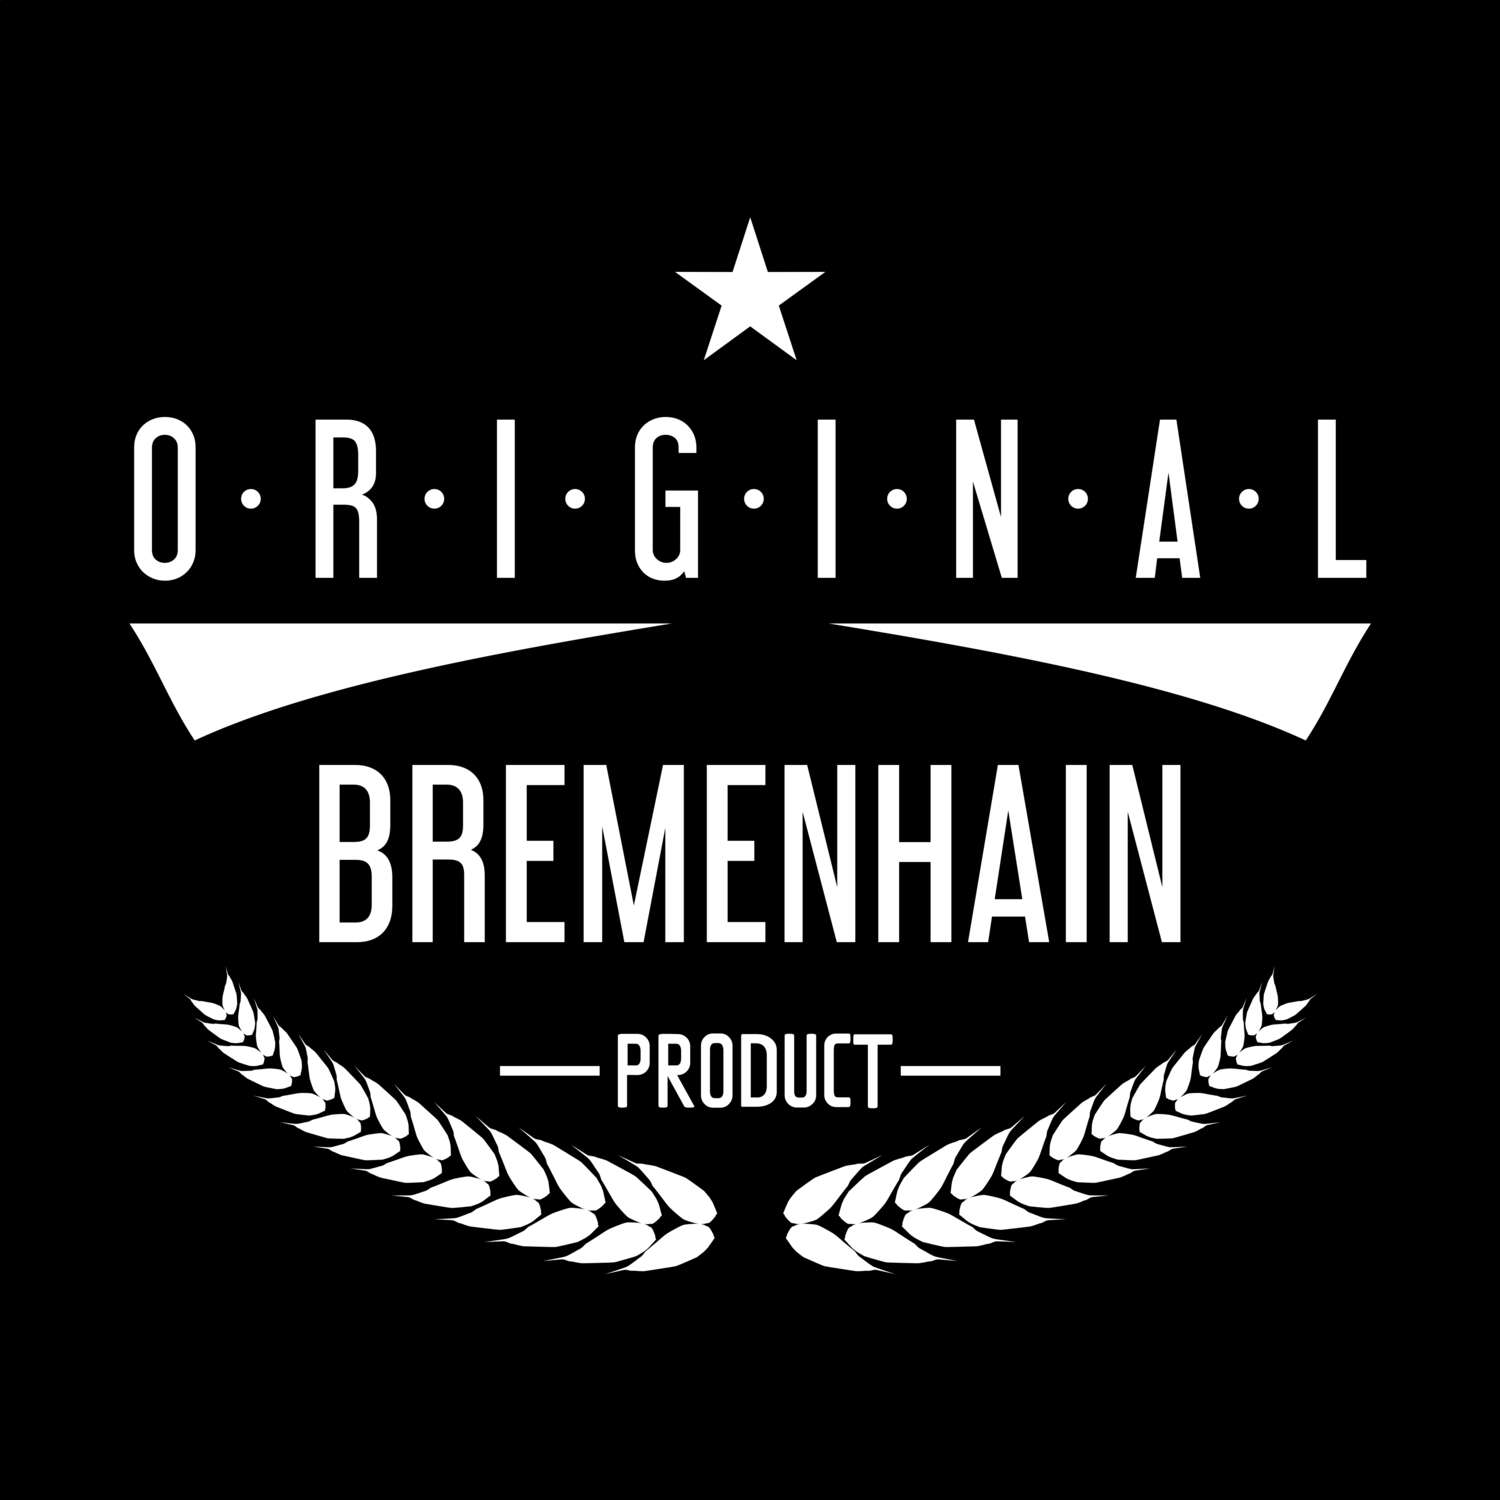 Bremenhain T-Shirt »Original Product«